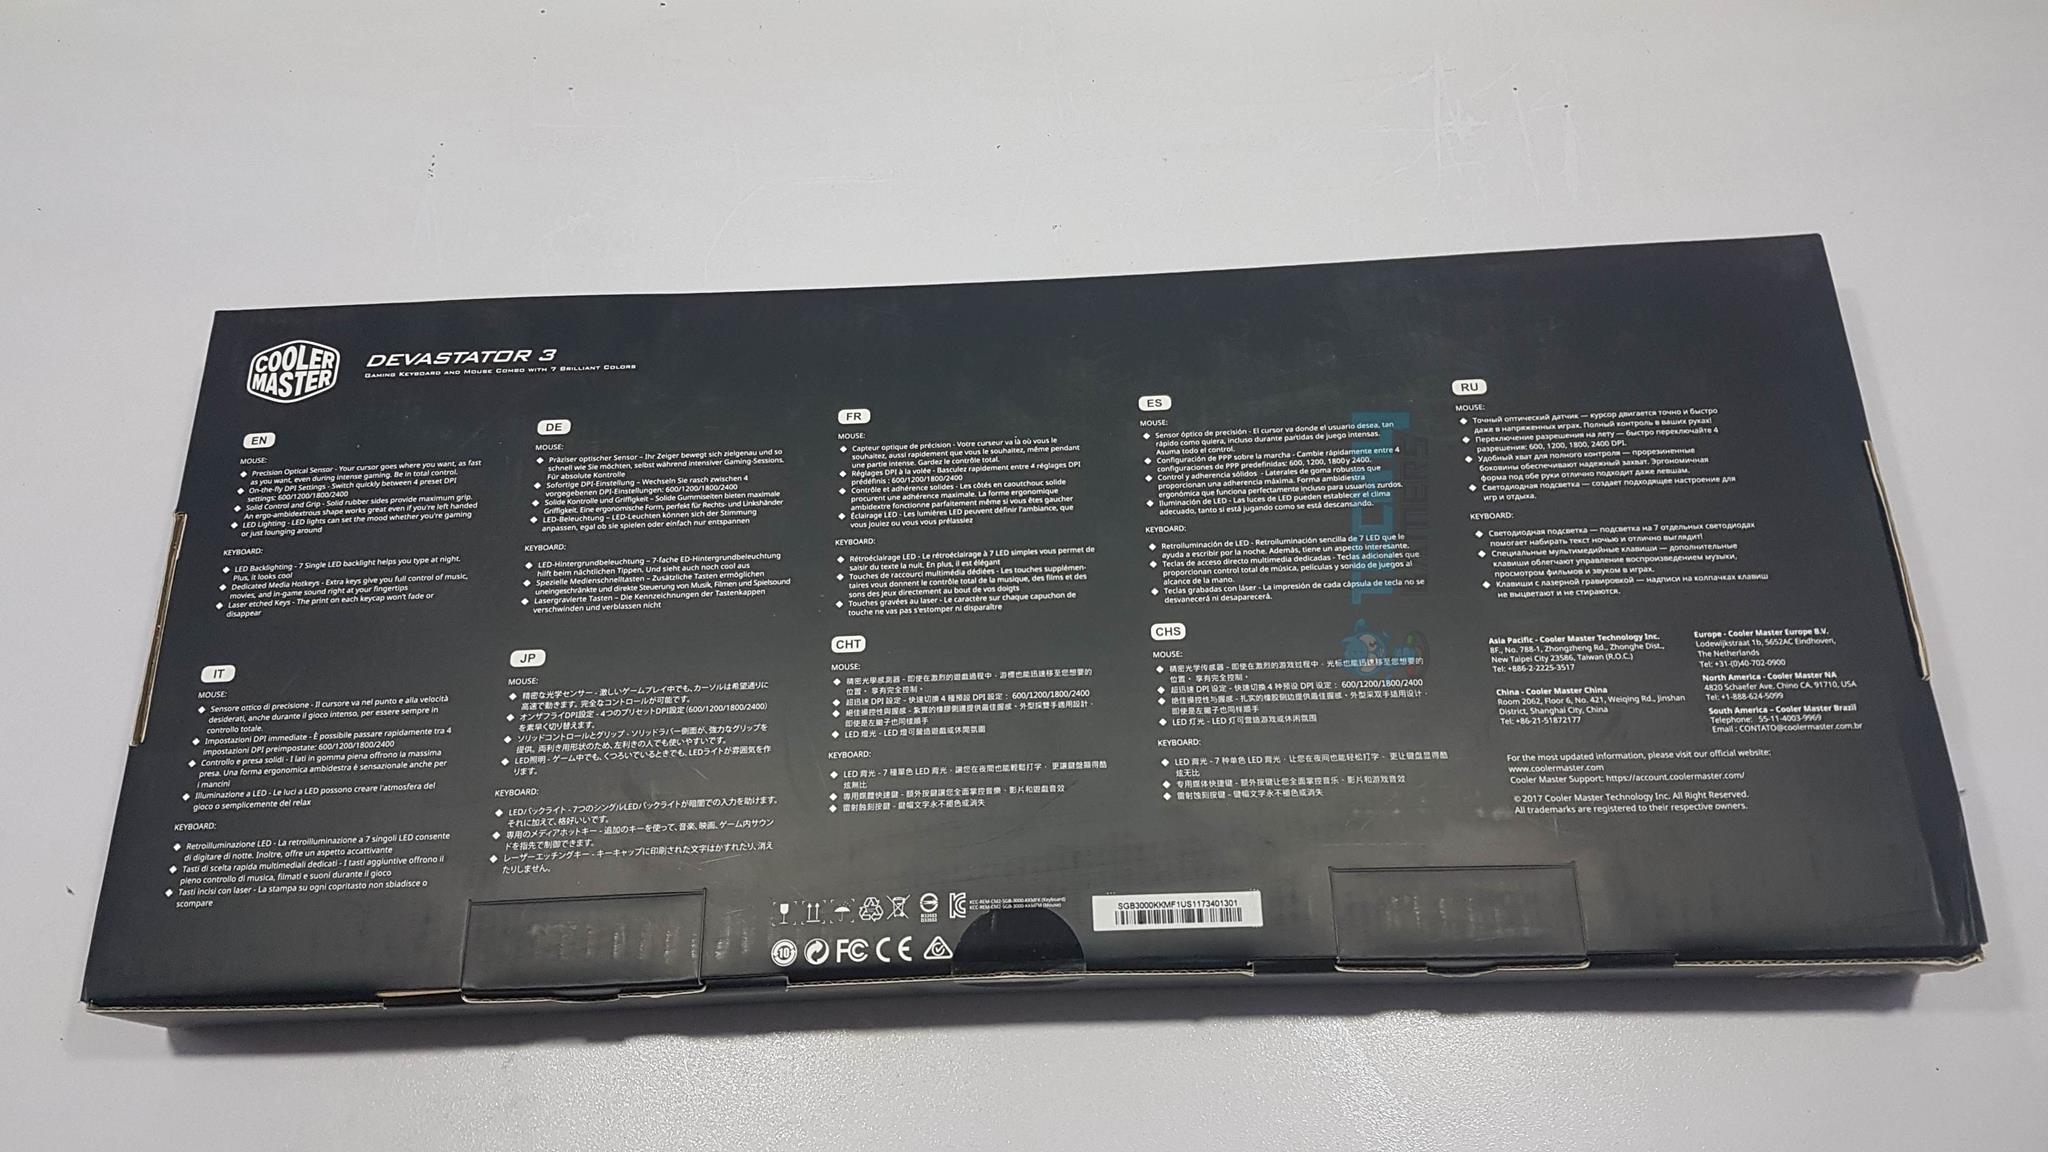 Devastator 3 back Packaging 